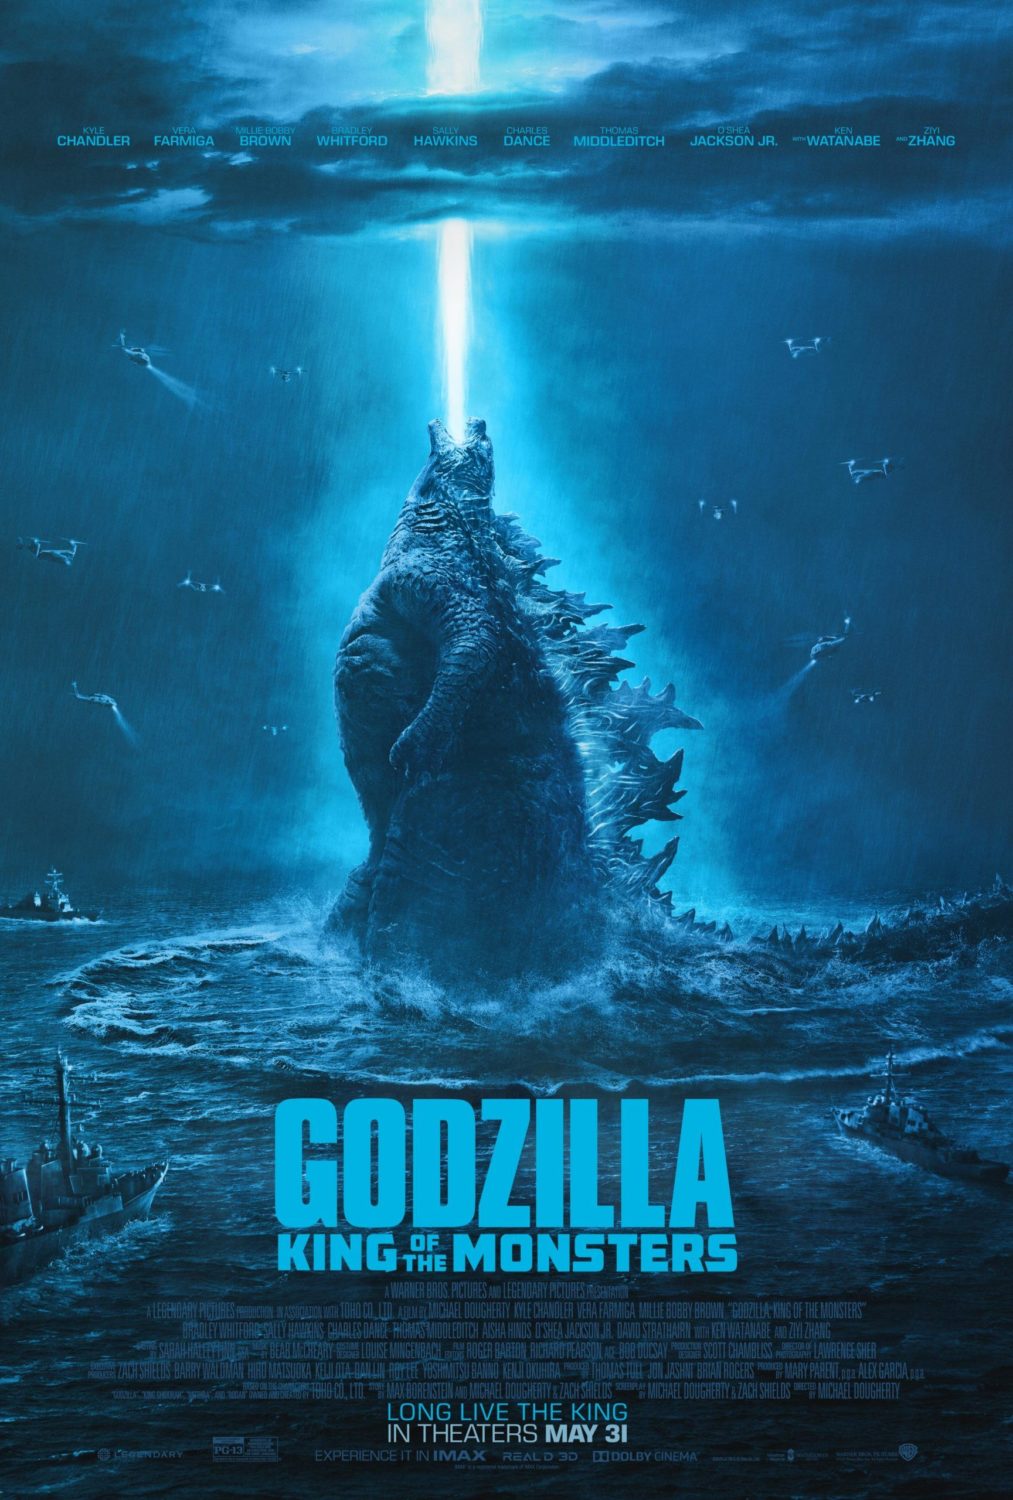 Godzilla poster from successful Lost Boys School of VFX alumni film credits for Visual Effects.